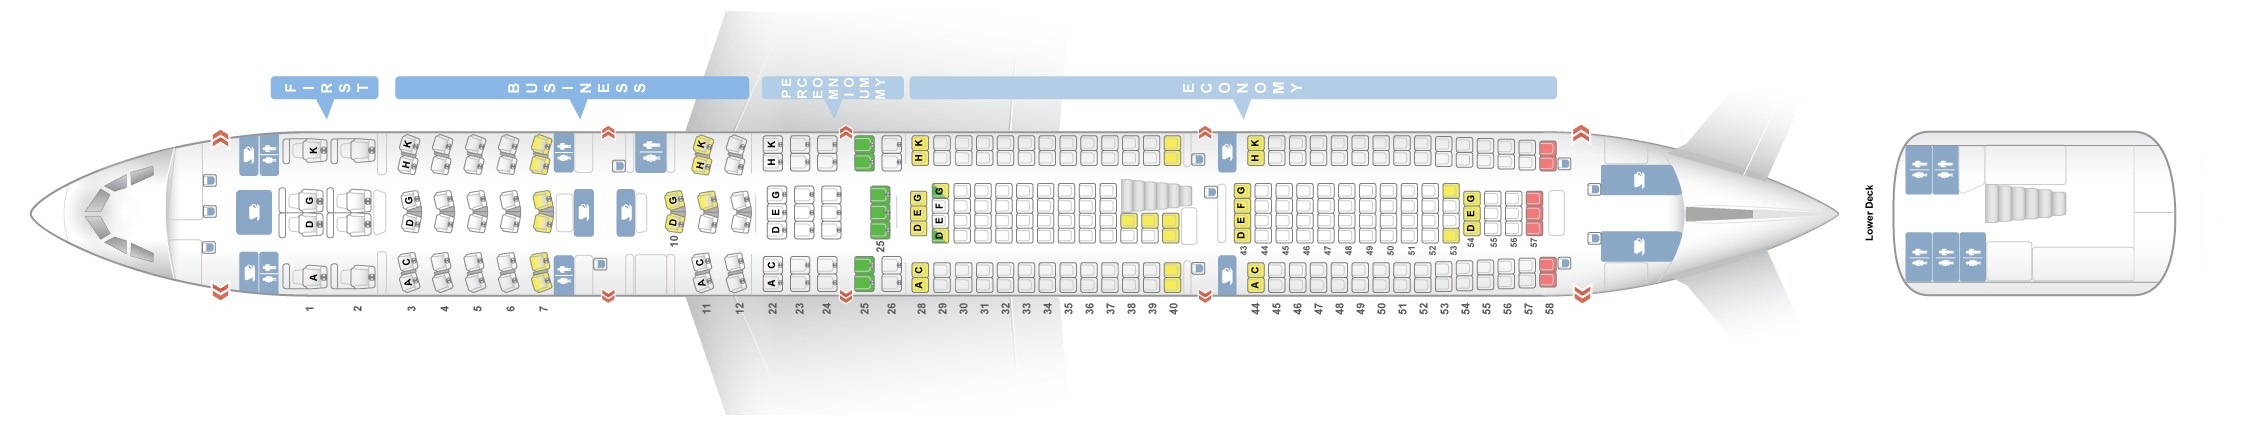 Airbus 346 Seating Chart